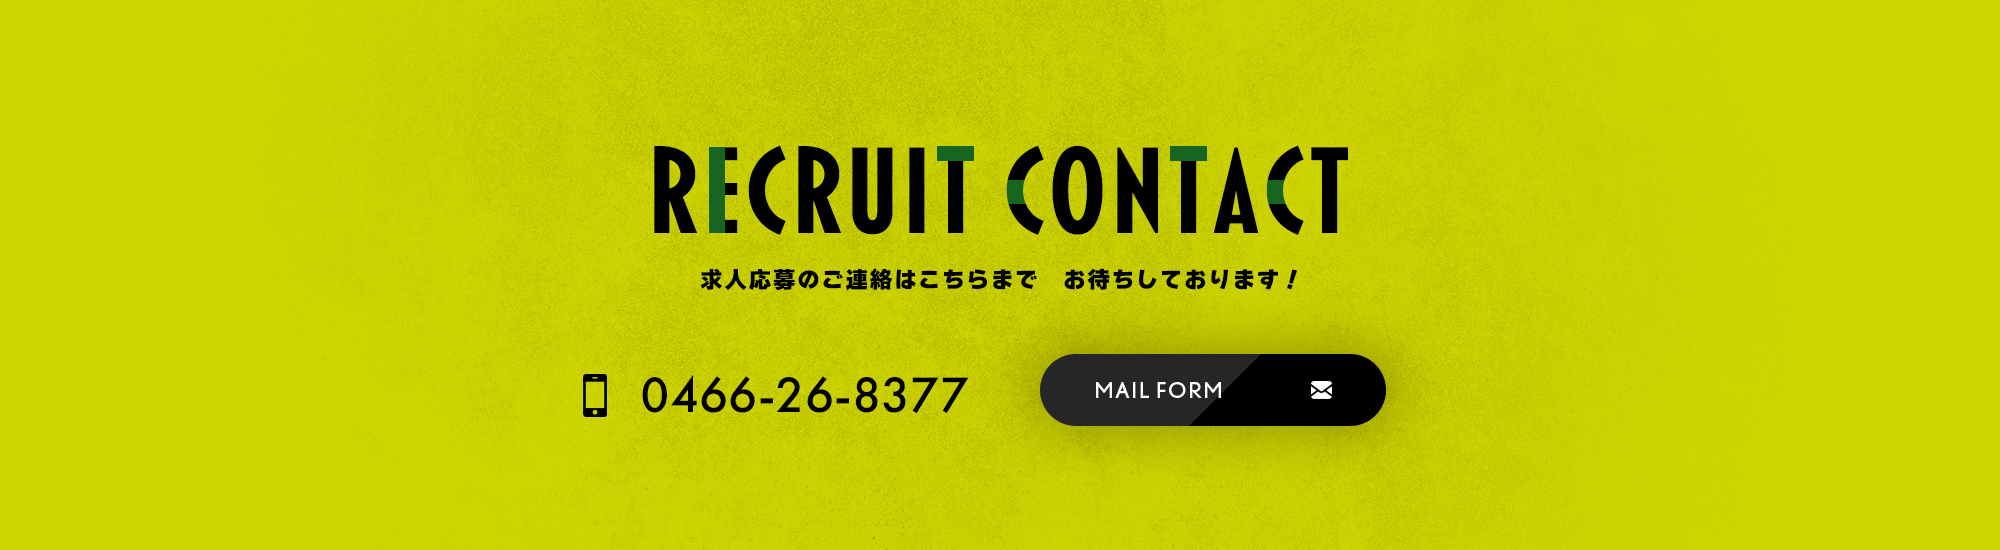 _bnr_contact_recruit